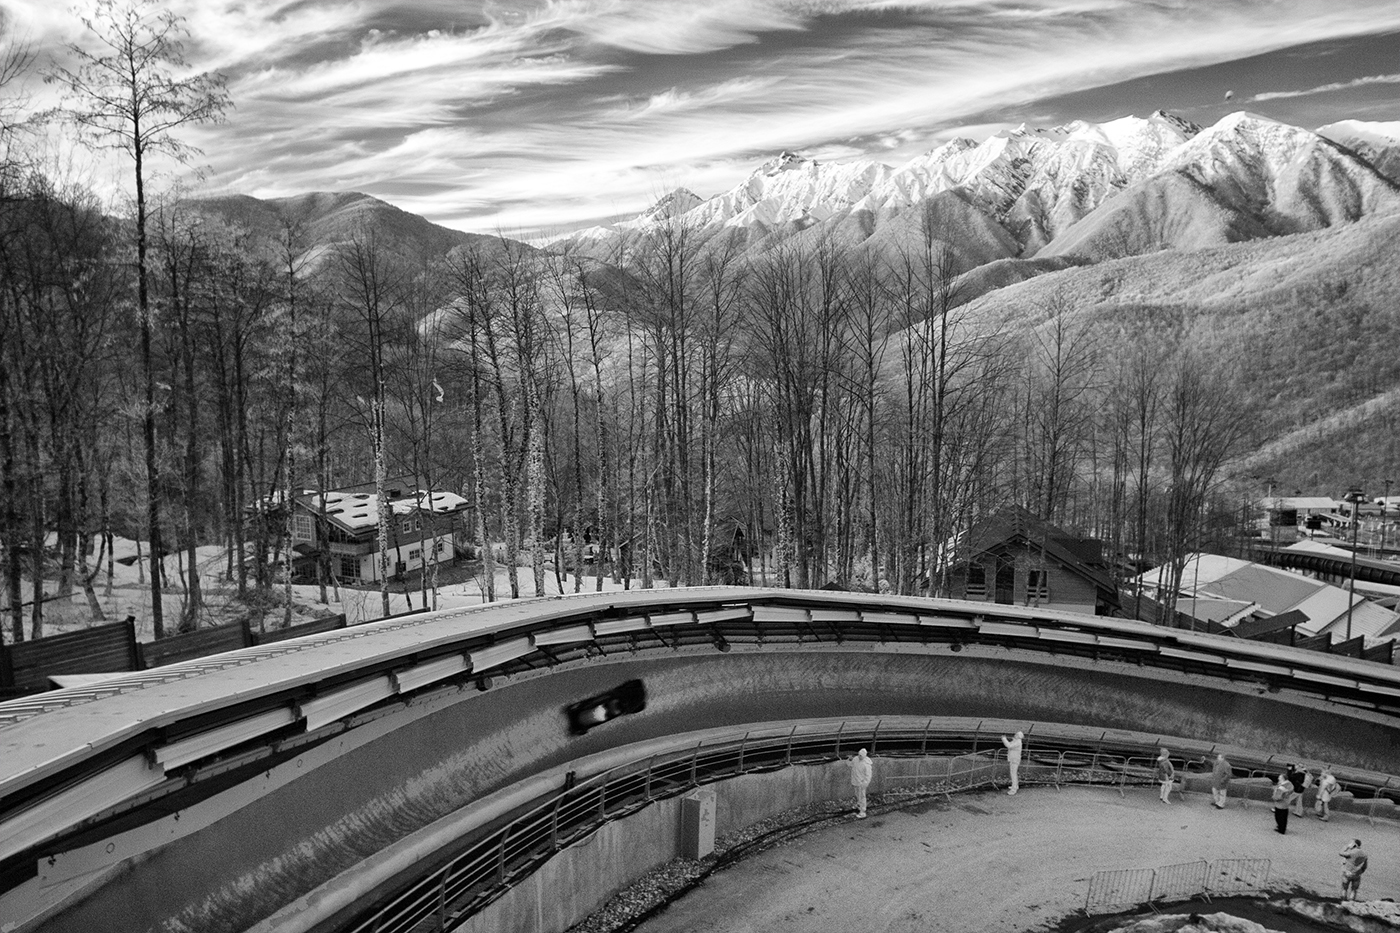 The Bobsled run and Sochi in the distance    ©2014 David Burnett/IOC : Sochi 2014 - the Winter Games : David Burnett | Photographer